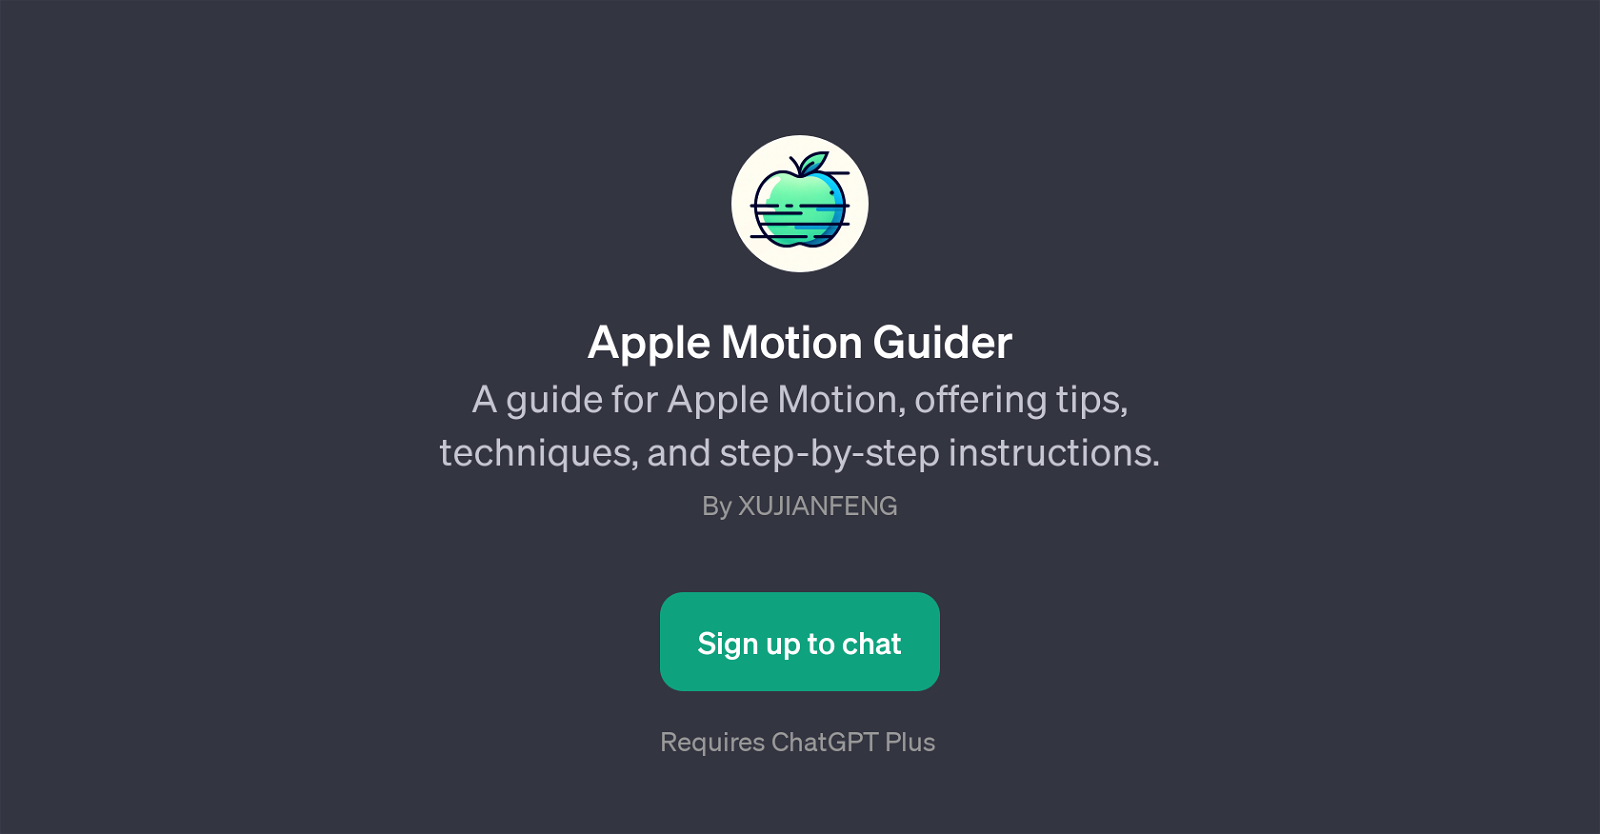 Apple Motion Guider website